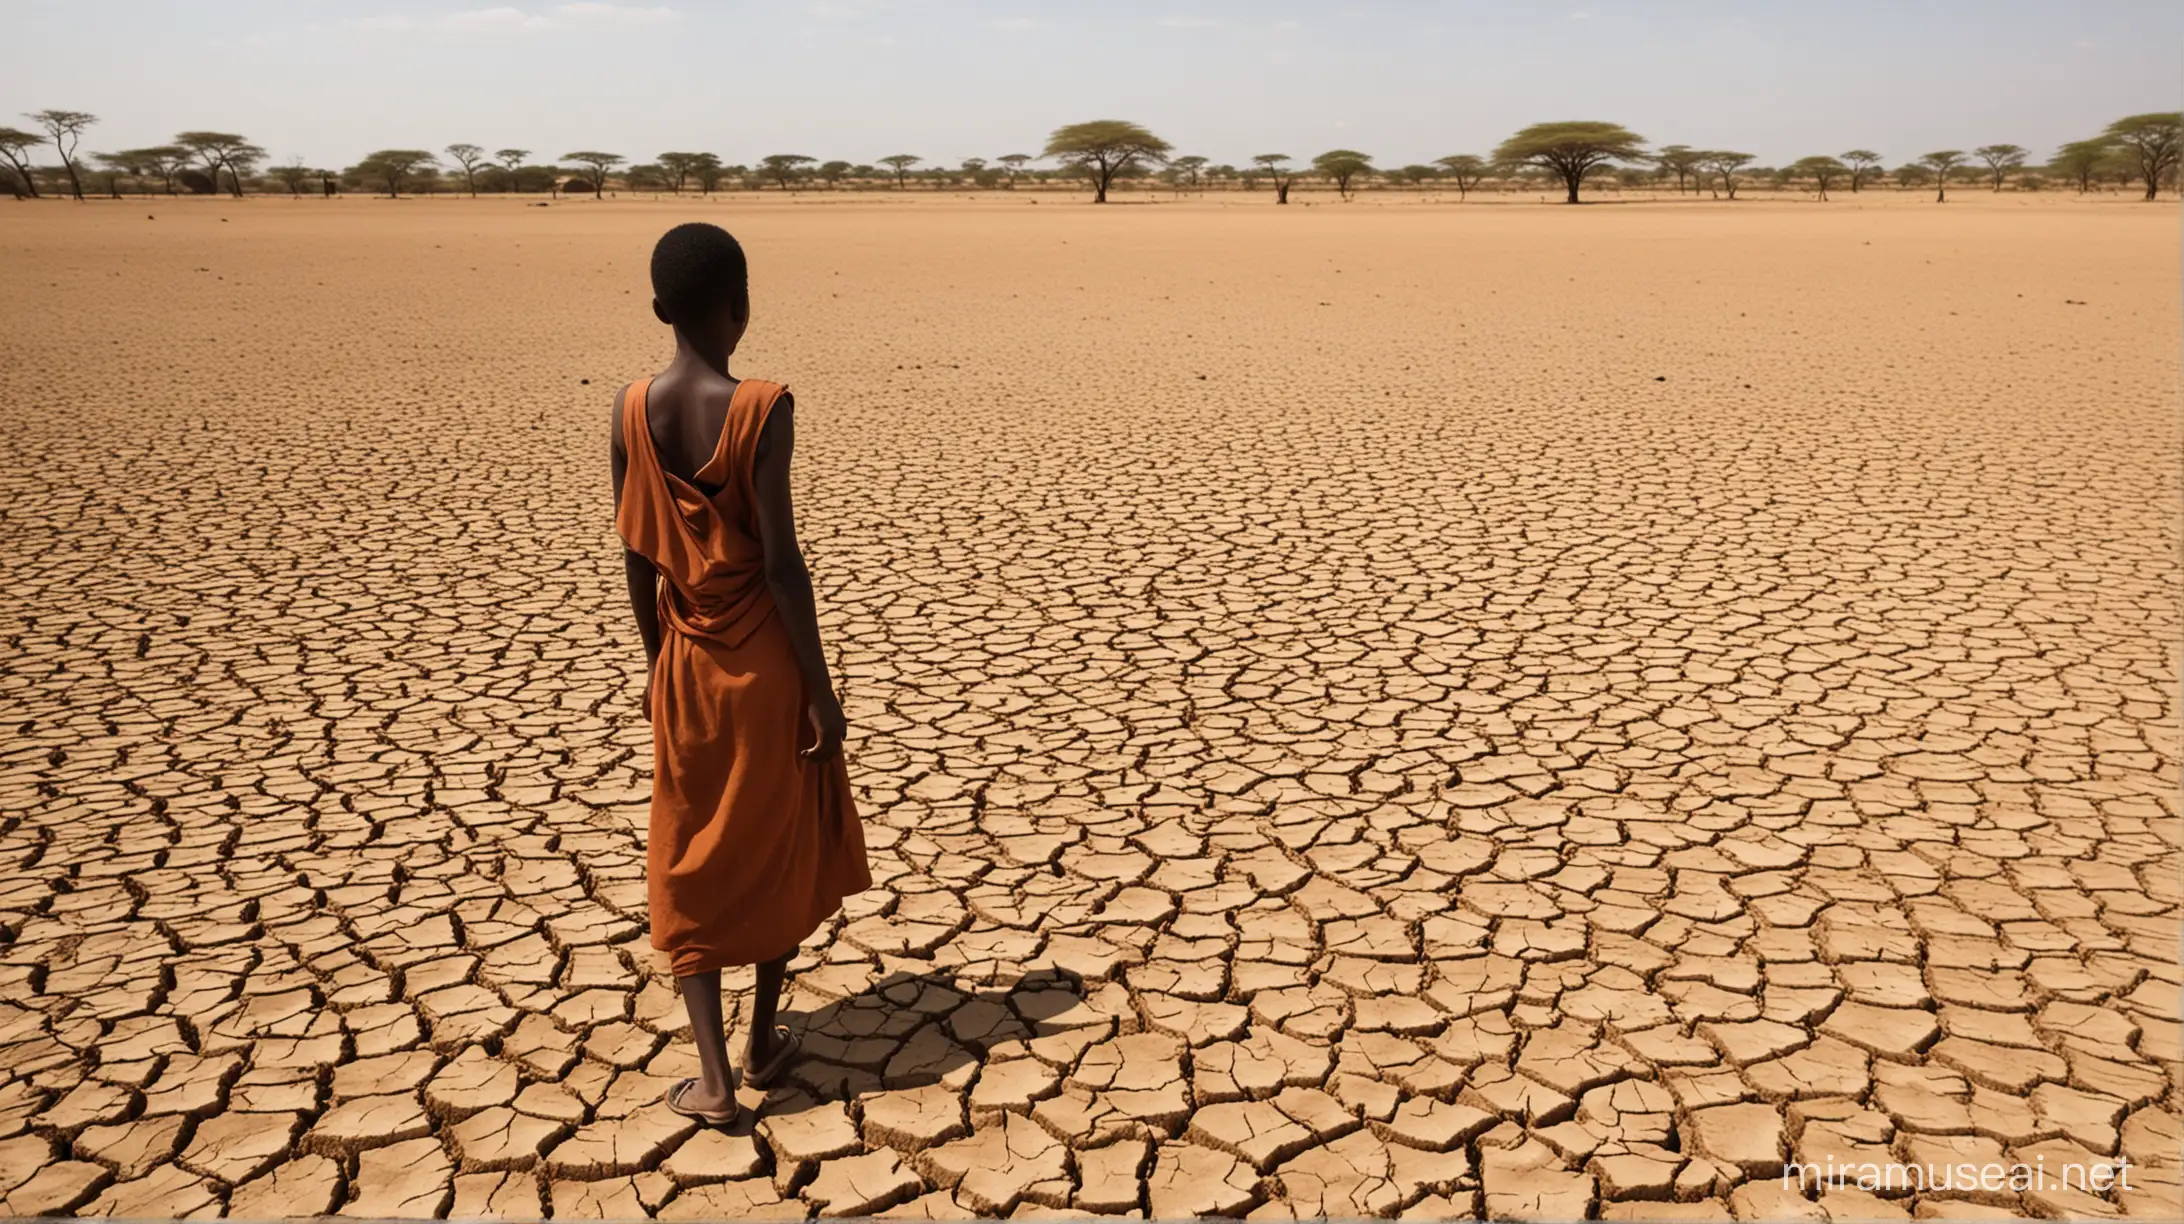 Desolate Landscape of Africa Drought